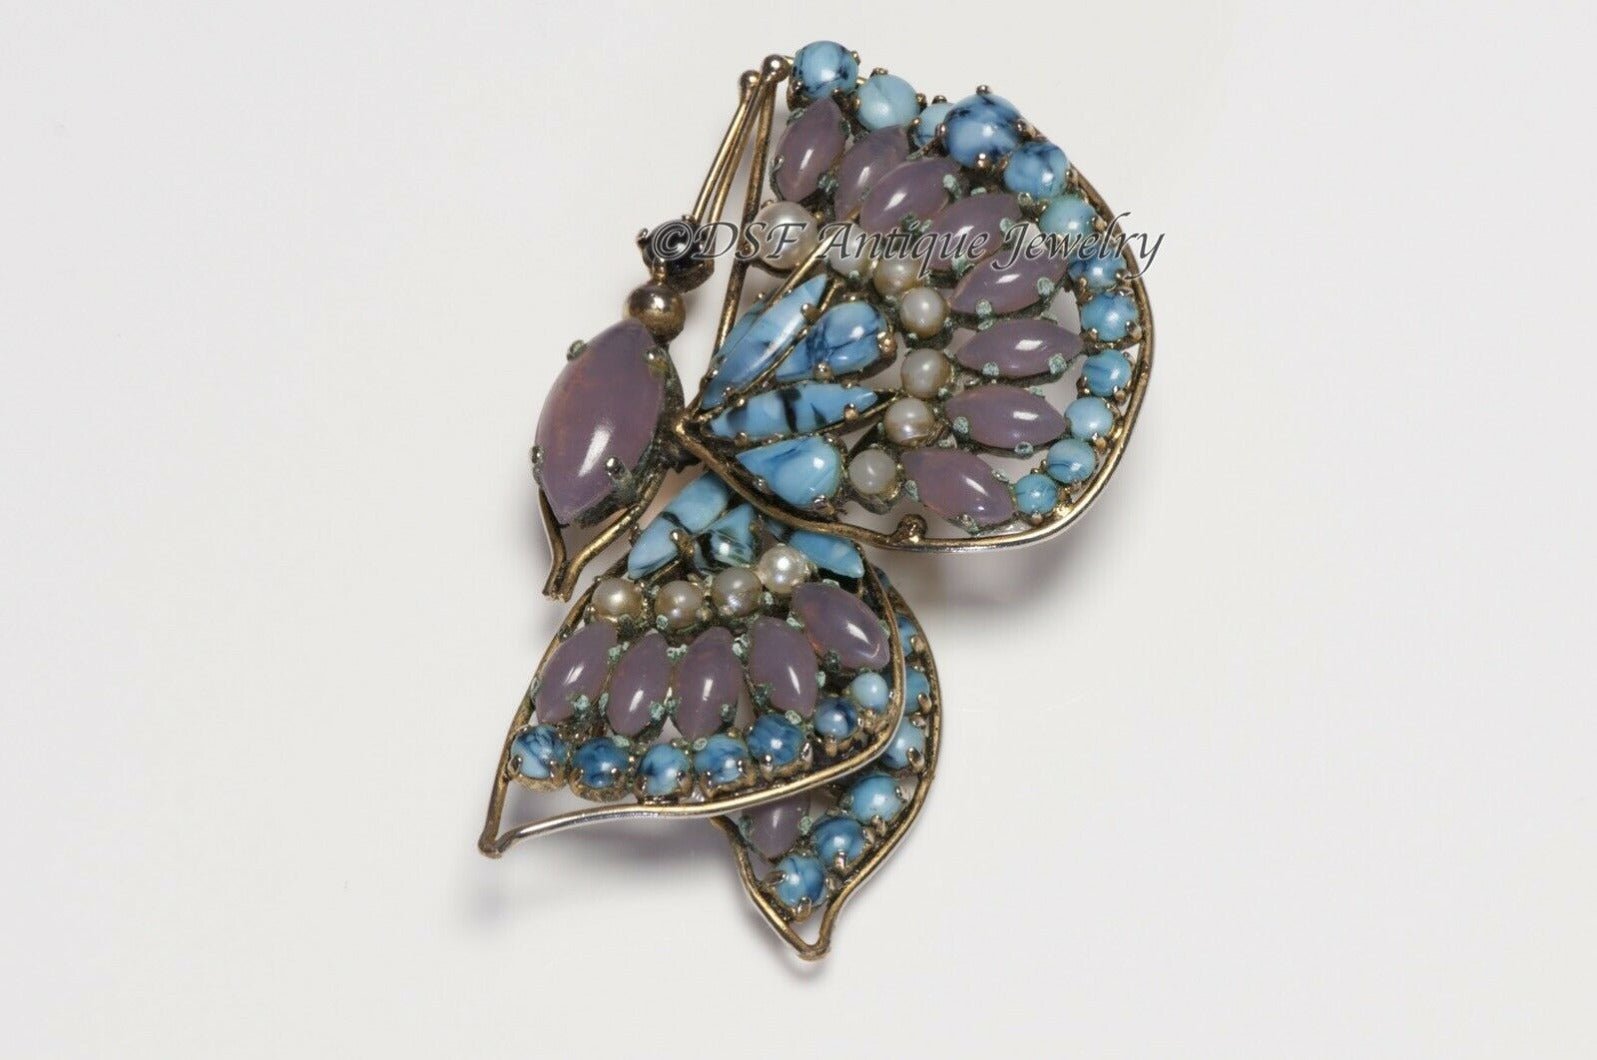 Christian Dior Henkel & Grosse 1964 Blue Pink Glass Faux Pearl Butterfly Brooch - DSF Antique Jewelry